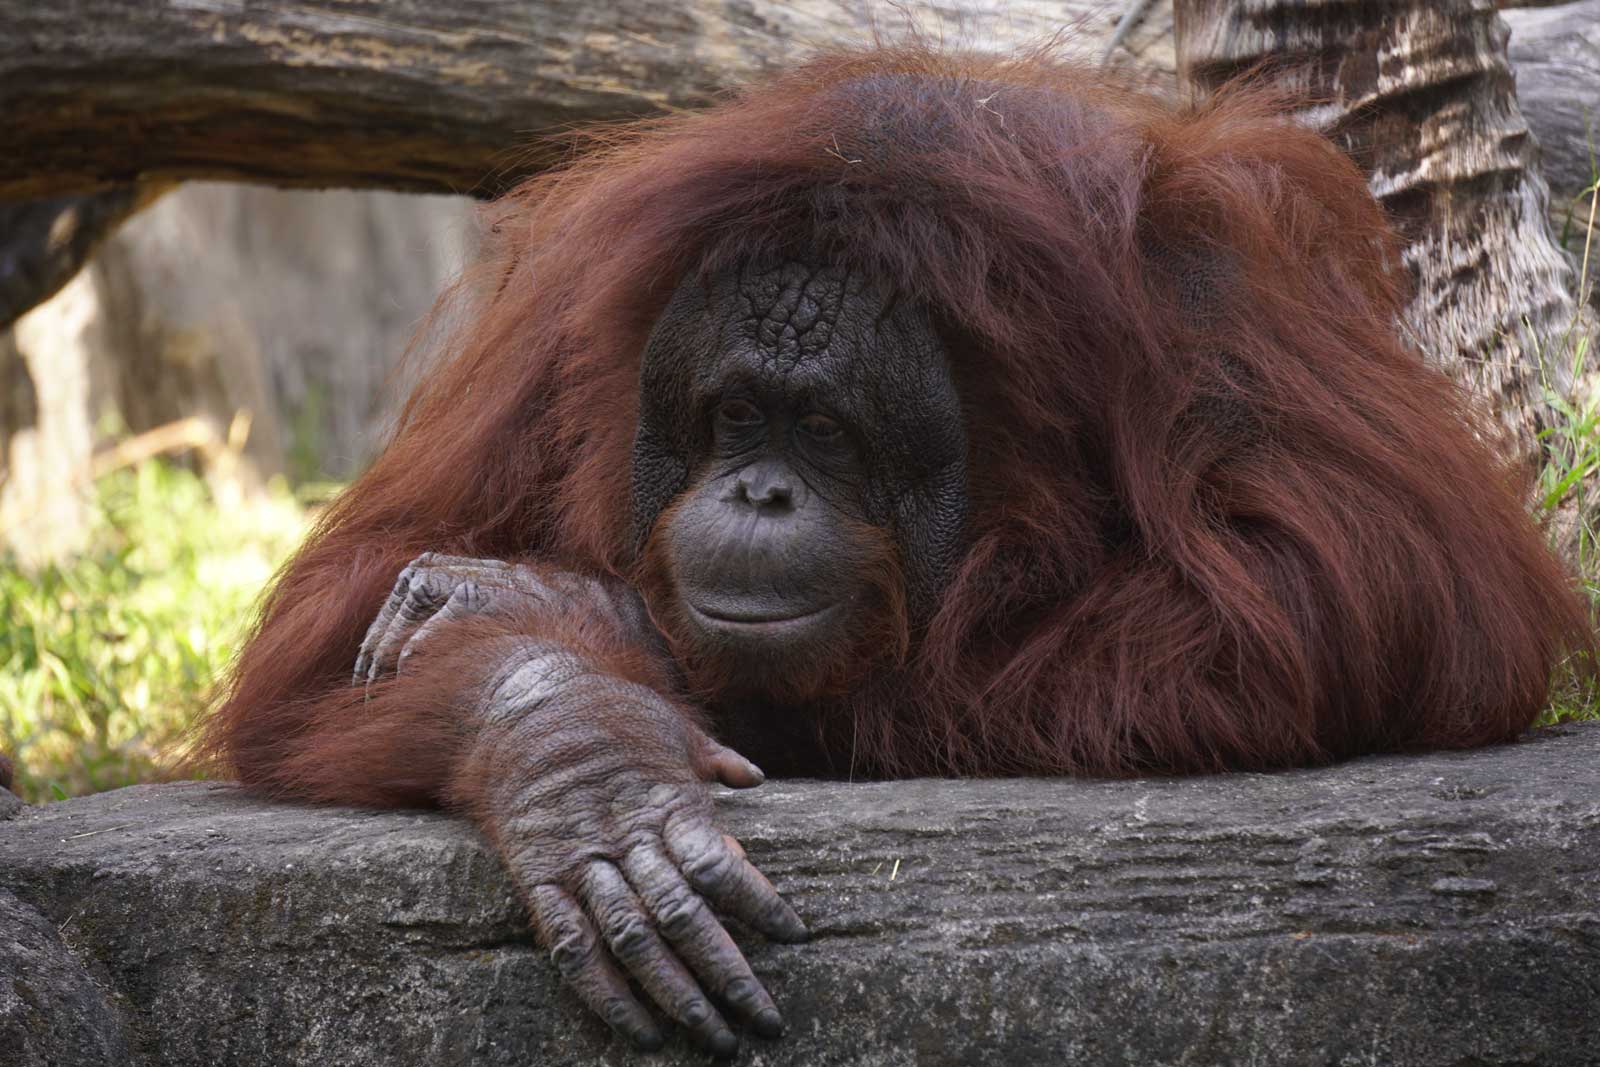 Orangutan in Indonesia by Uzumaki Anam